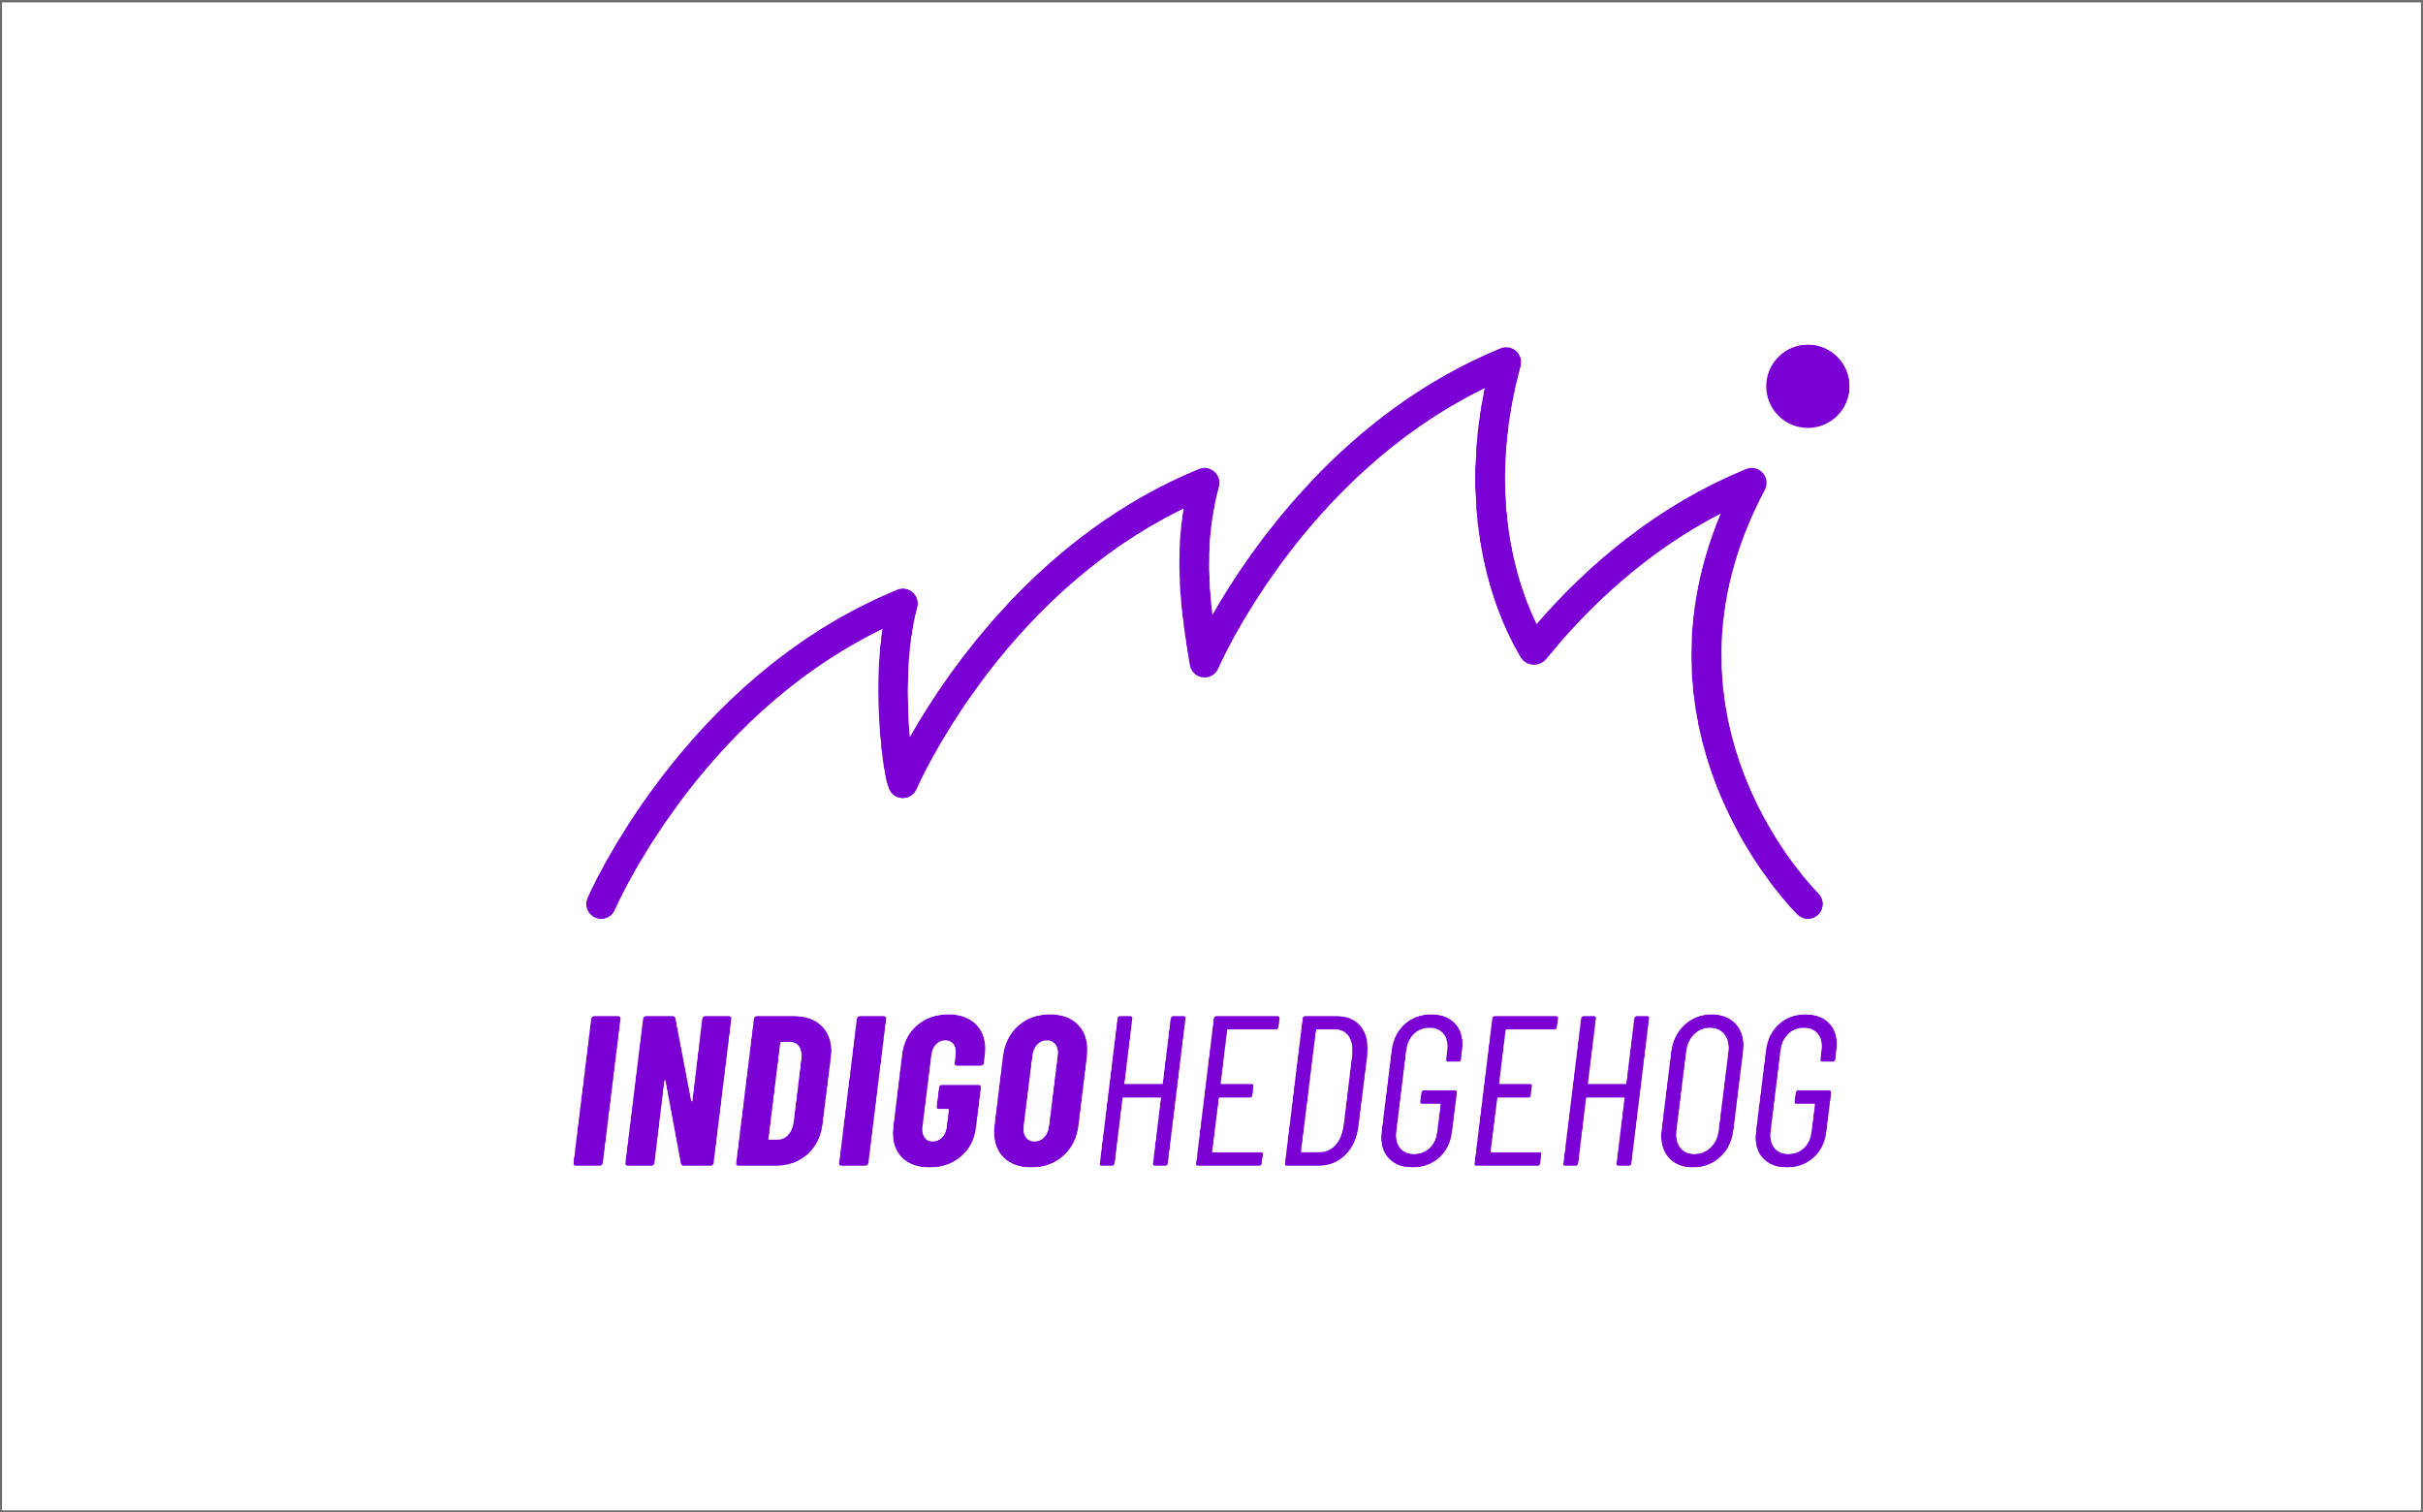 Logo Design for Indigo Hedgehog.  Made by Jon Glanville - Plymouth Graphic Designer.